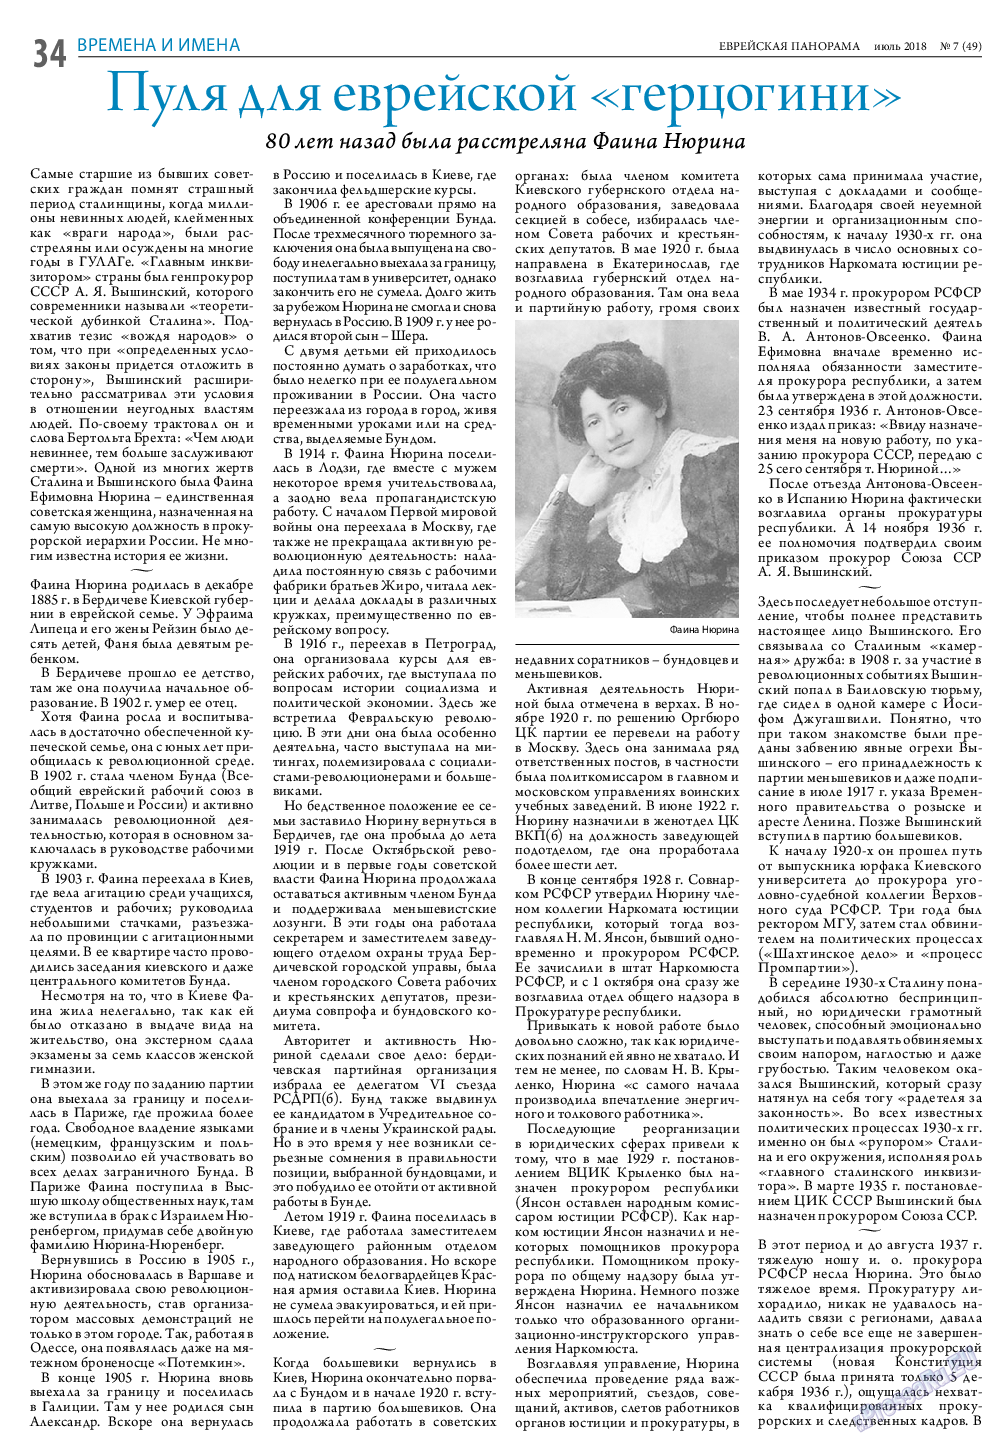 Еврейская панорама, газета. 2018 №7 стр.34